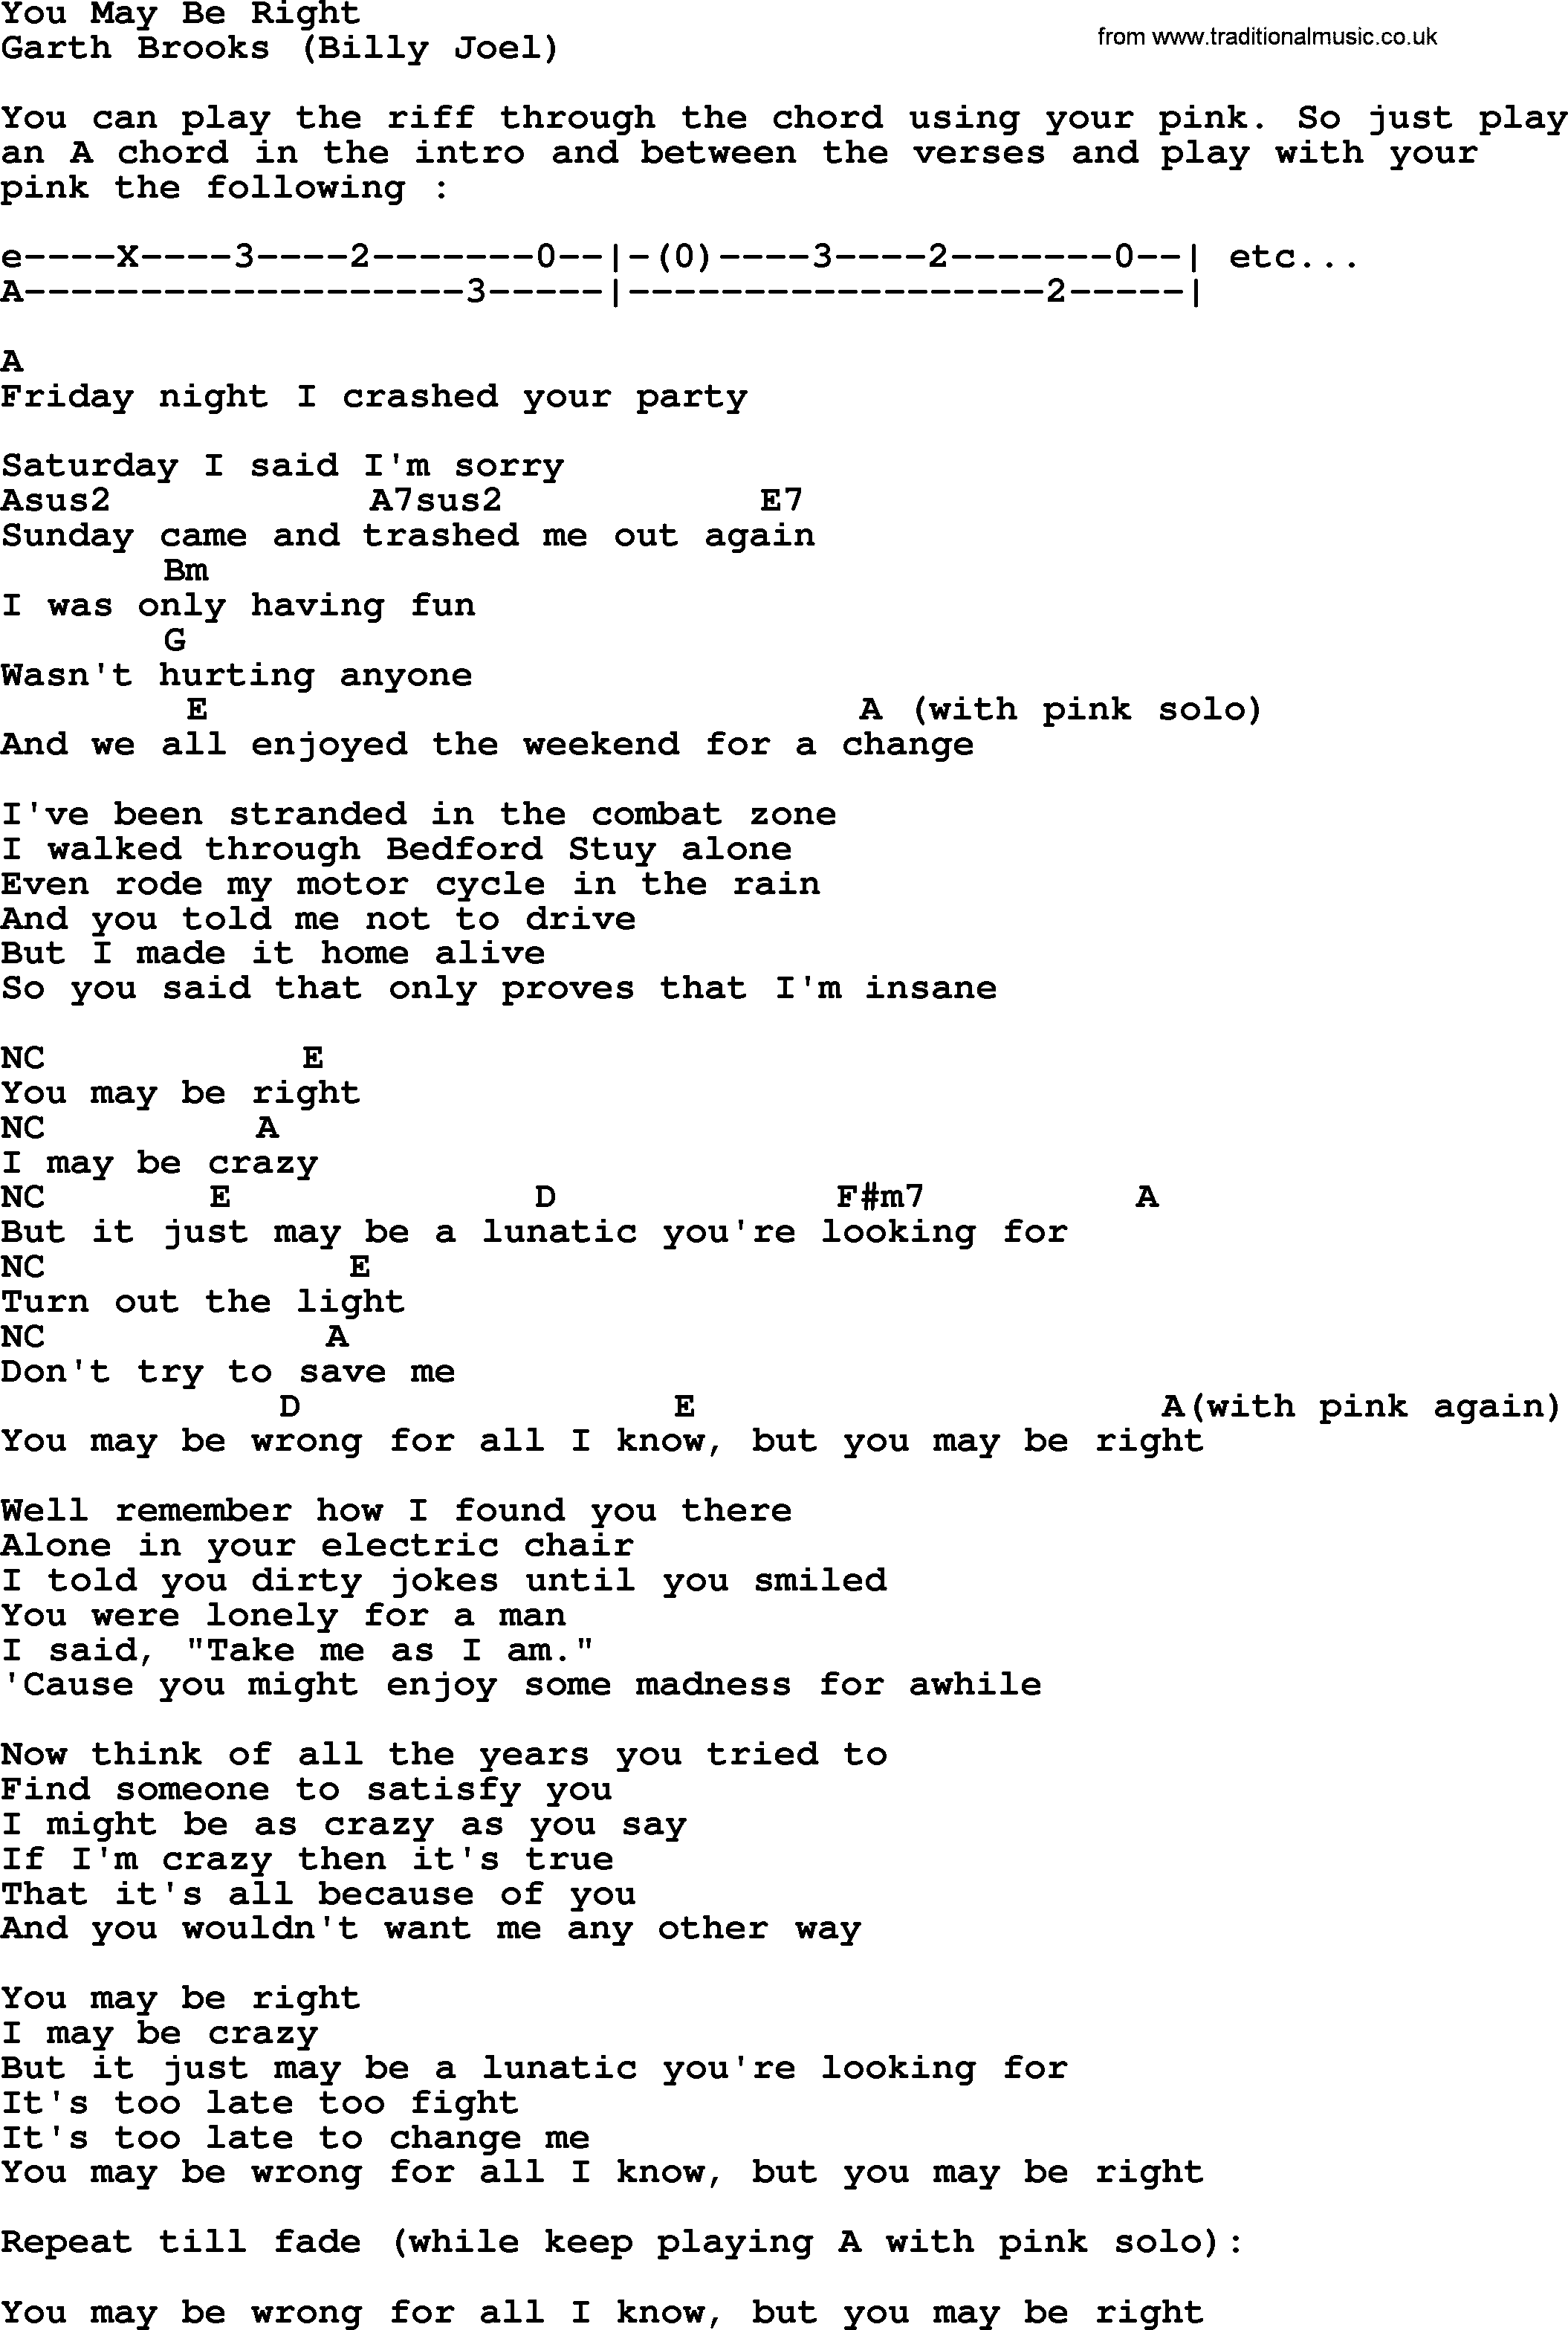 Garth Brooks song: You May Be Right, lyrics and chords